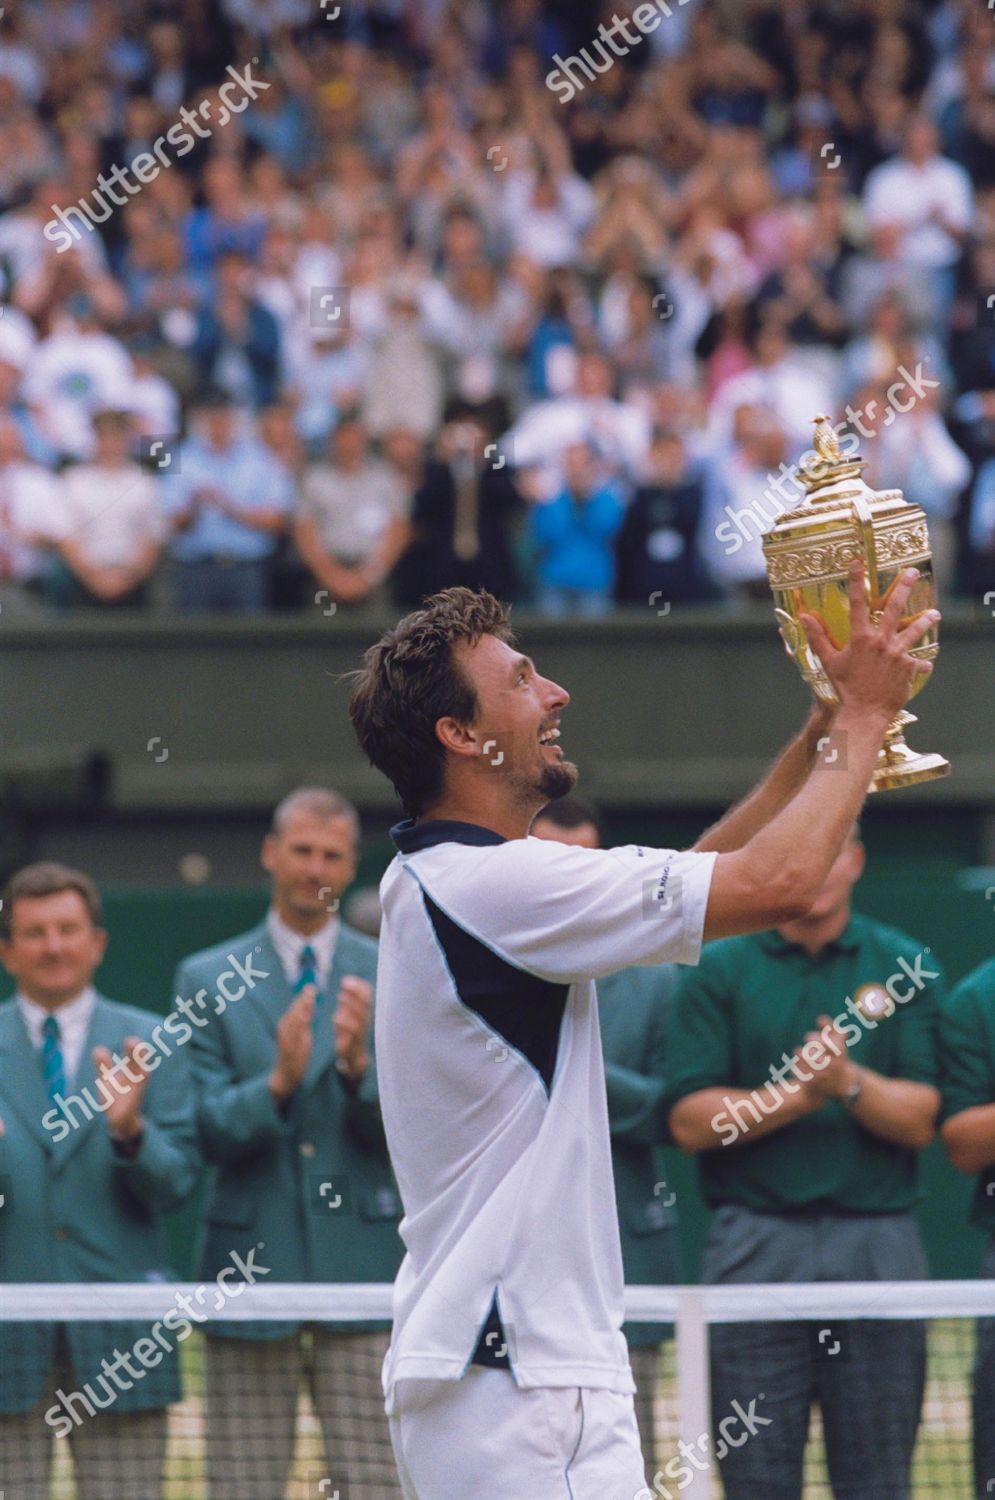 wimbledon-2001-tennis-championship-london-britain-shutterstock-editorial-339686c.jpg